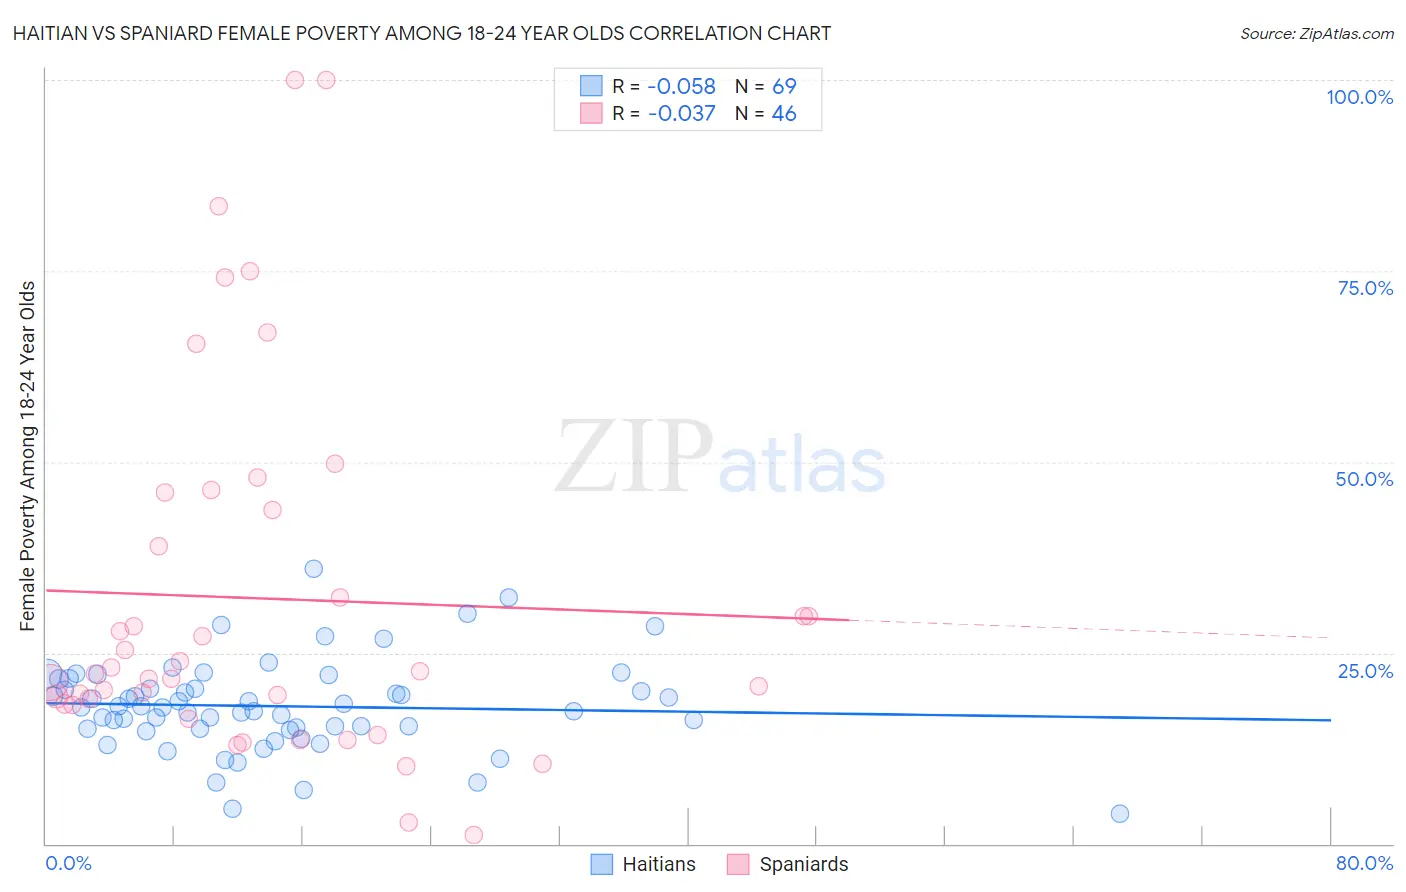 Haitian vs Spaniard Female Poverty Among 18-24 Year Olds